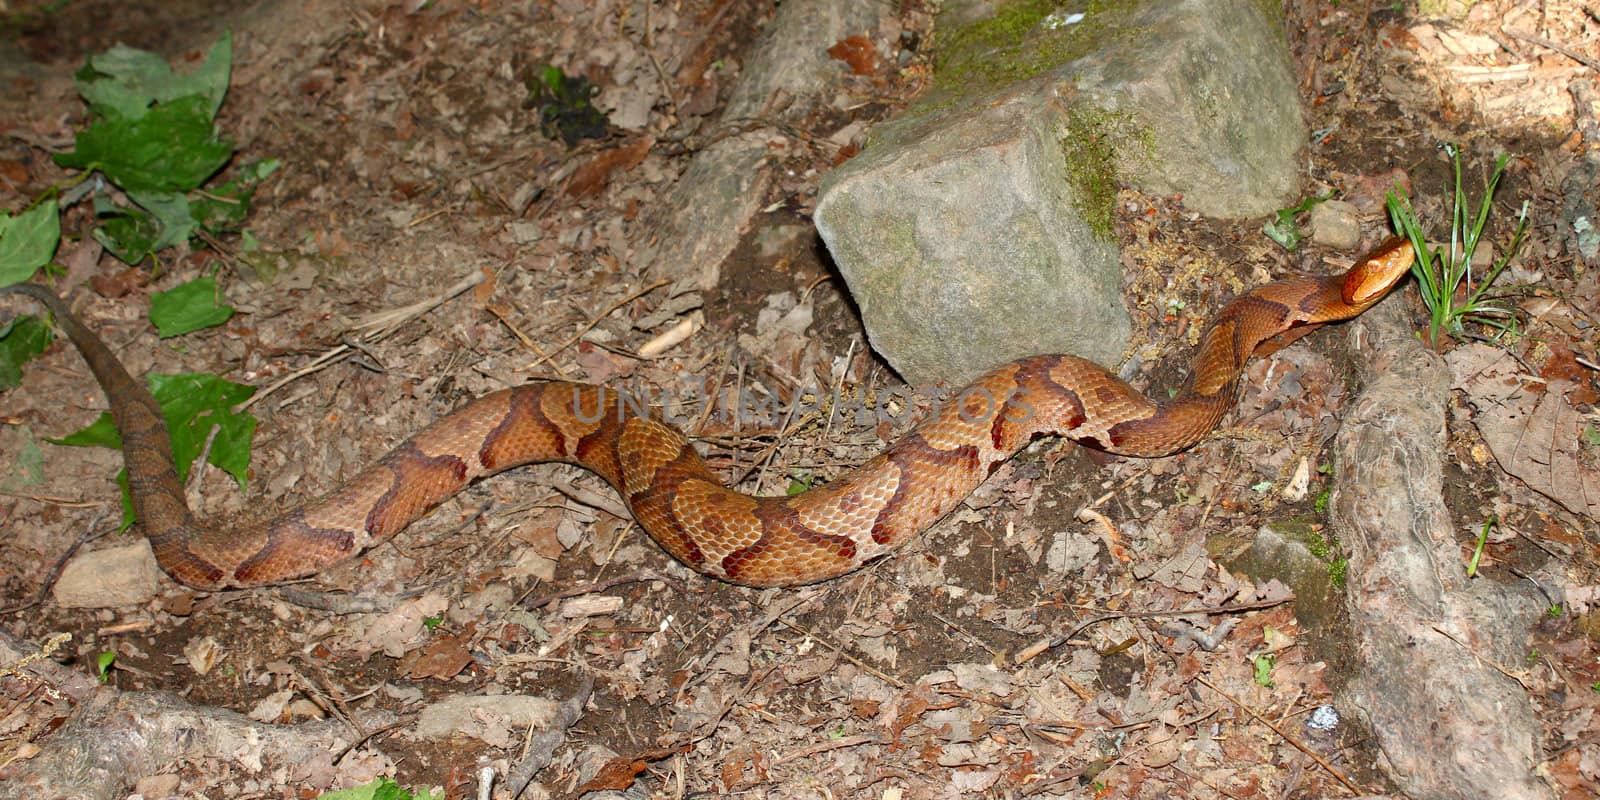 A venomous Copperhead (Agkistrodon contortrix) snake at Monte Sano State Park in Alabama.